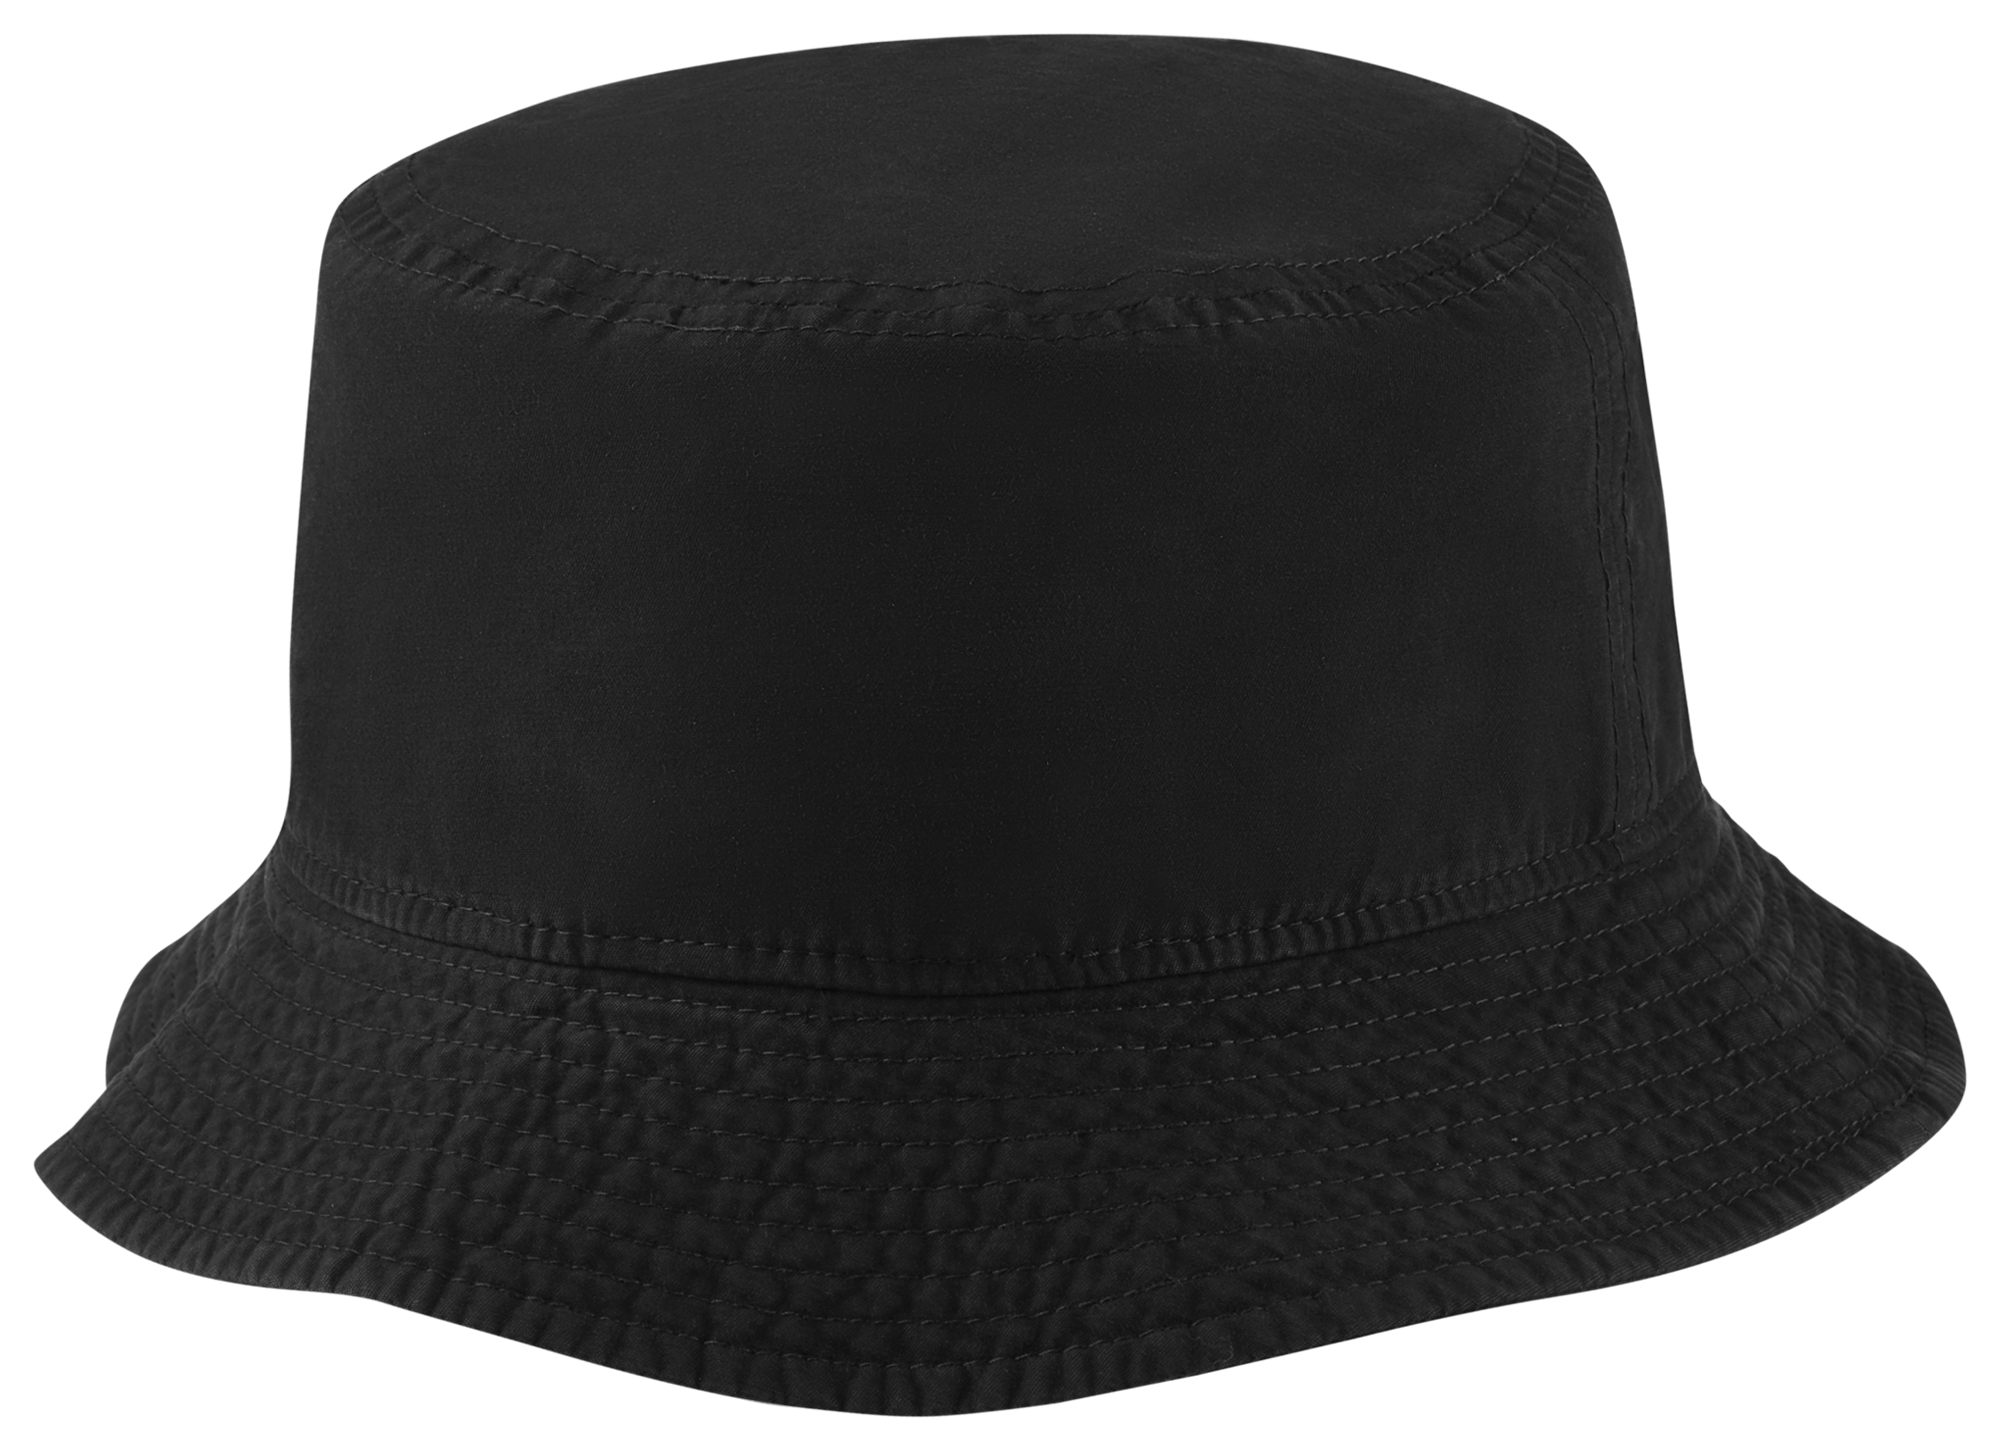 Jordan Jumpman Washed Bucket Hat - Black